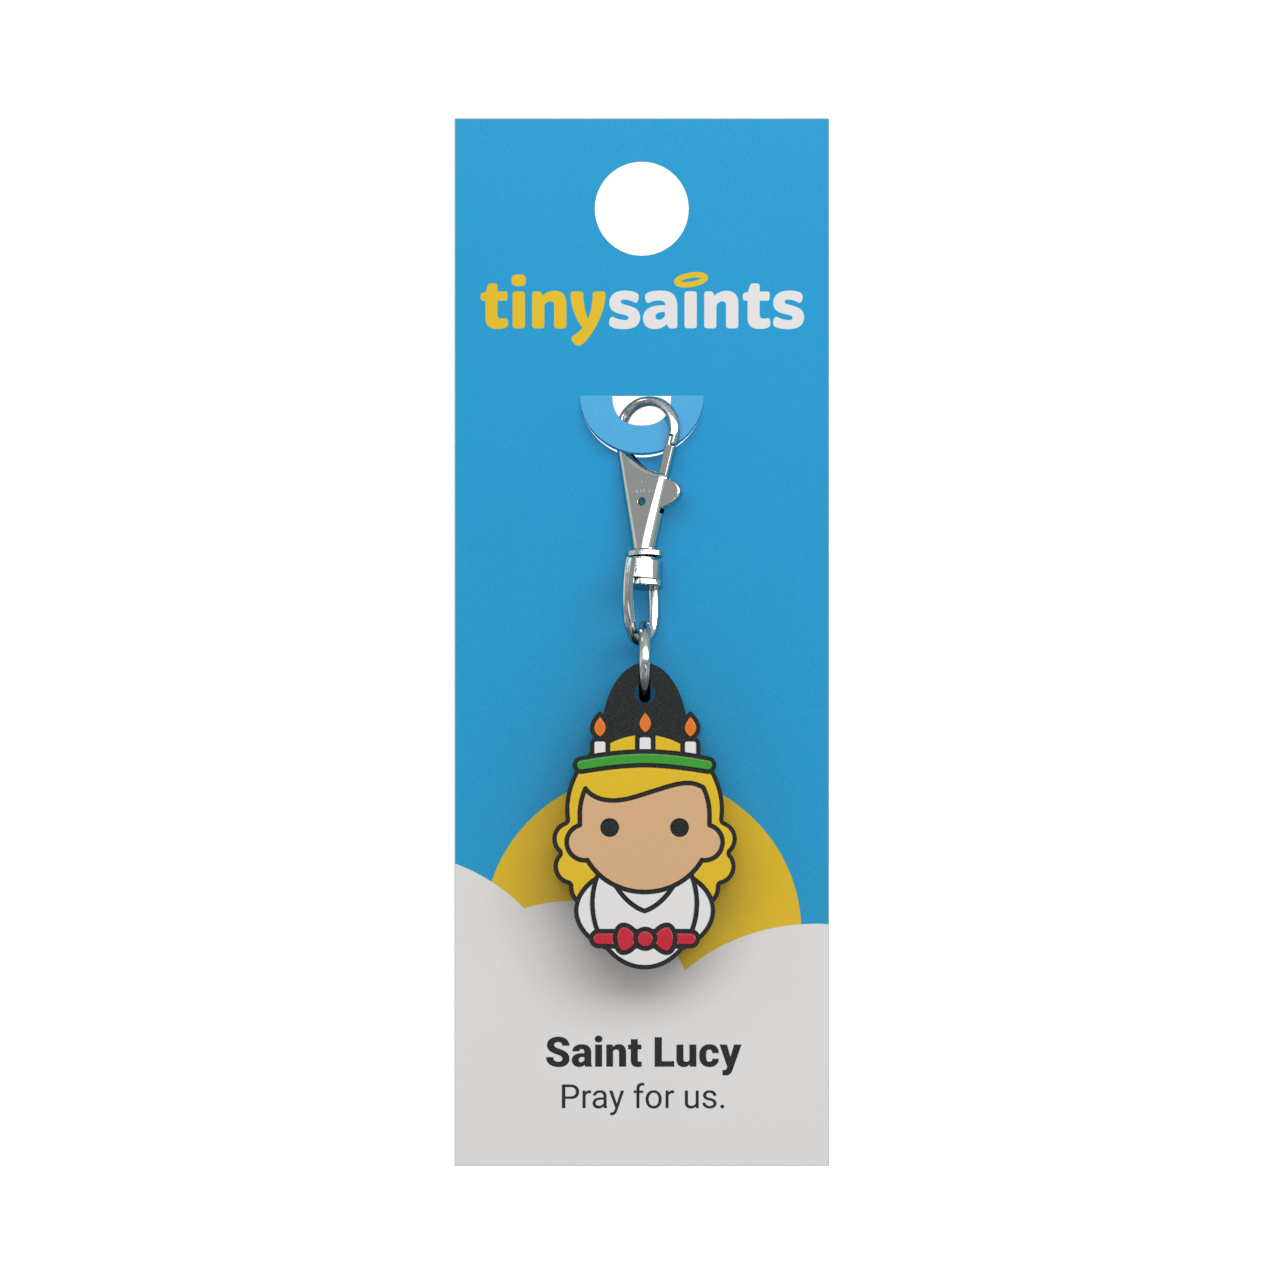 Saint Lucy